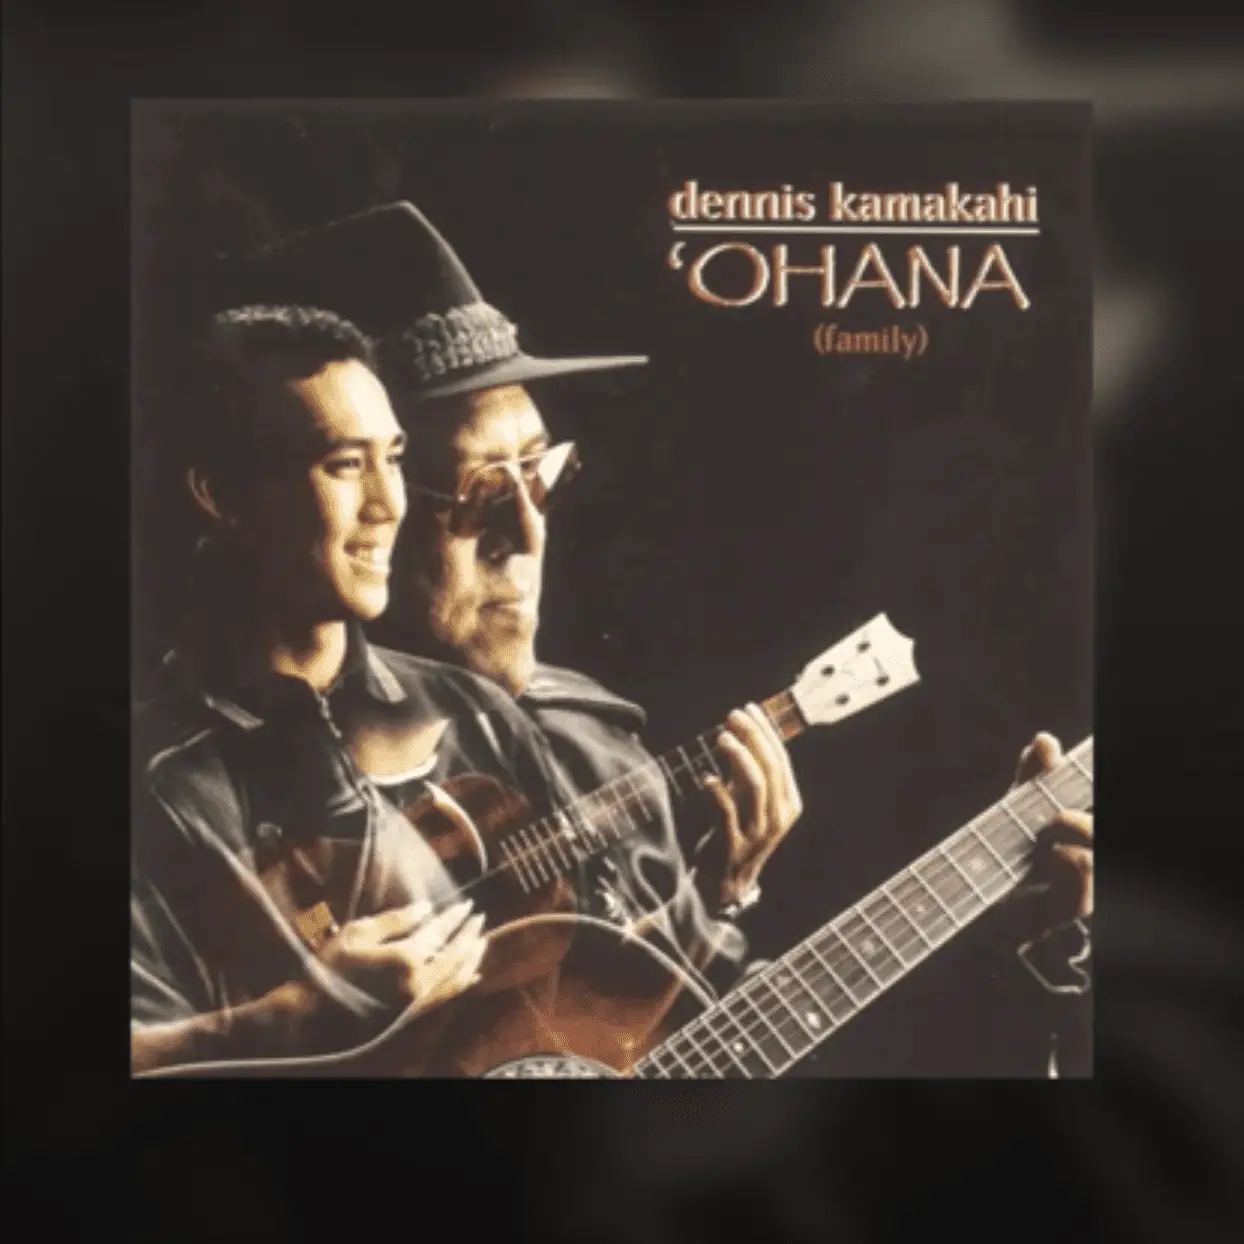 Capa do álbum 'Ohana, Dennis e David Kamakahi